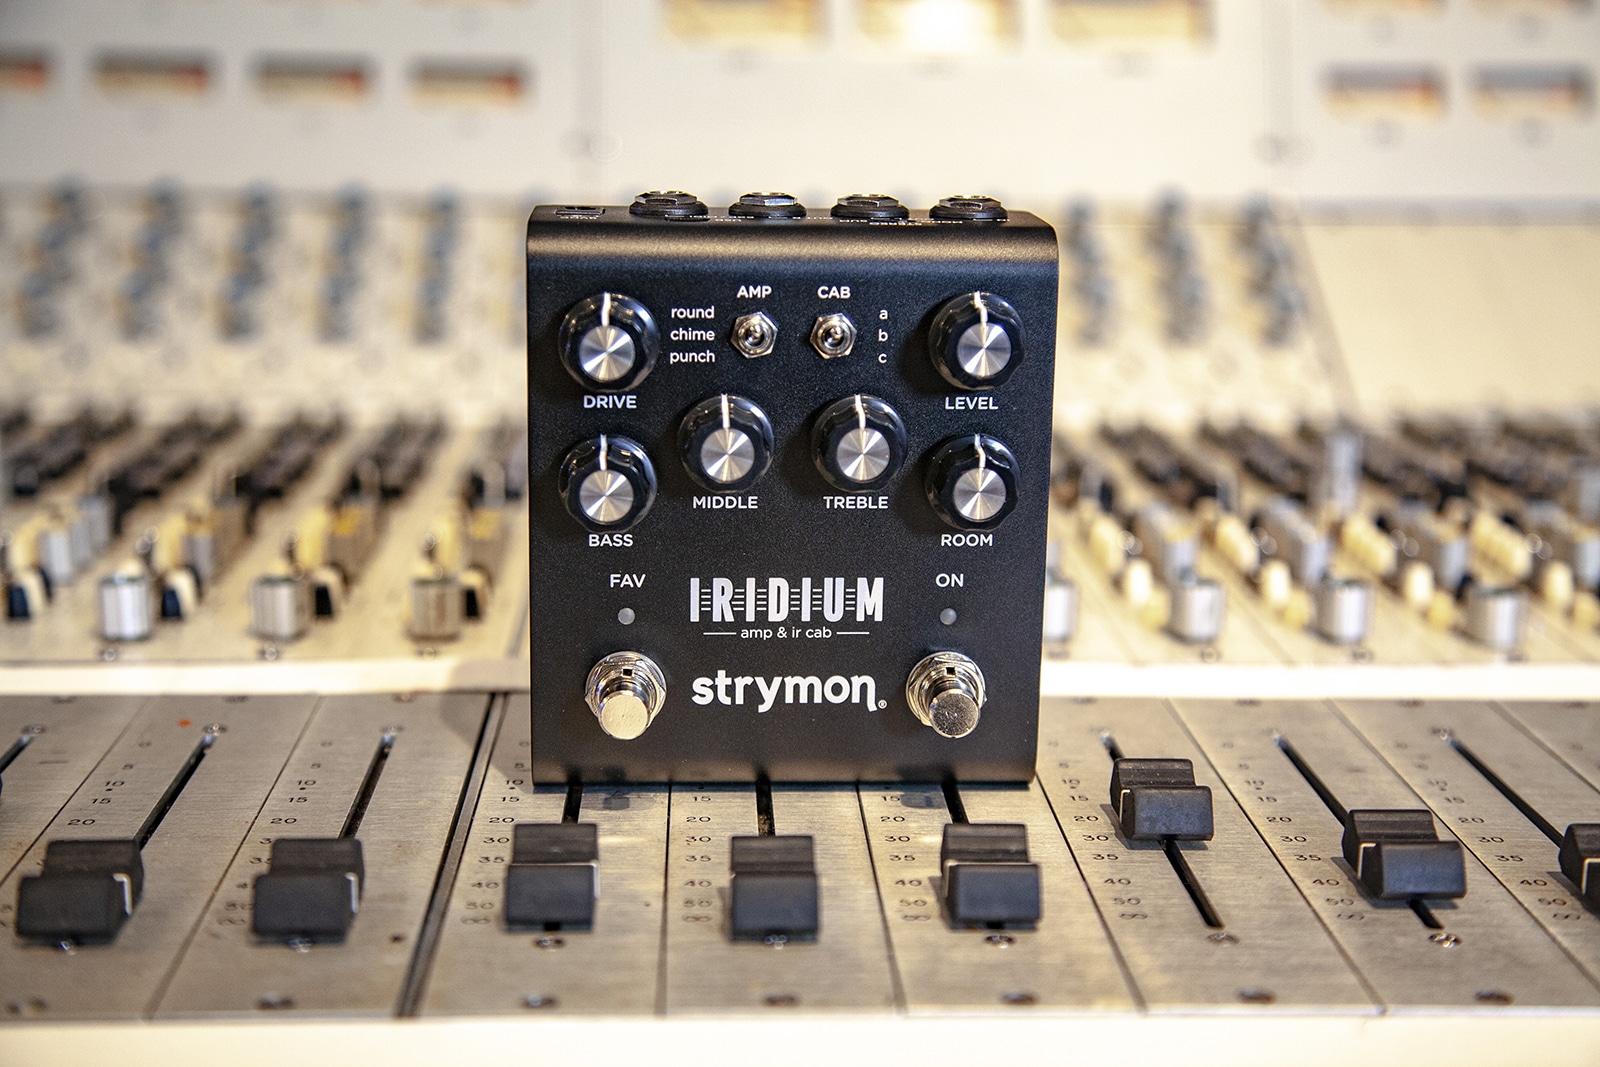 Strymon Iridium amp & IR cab in studio